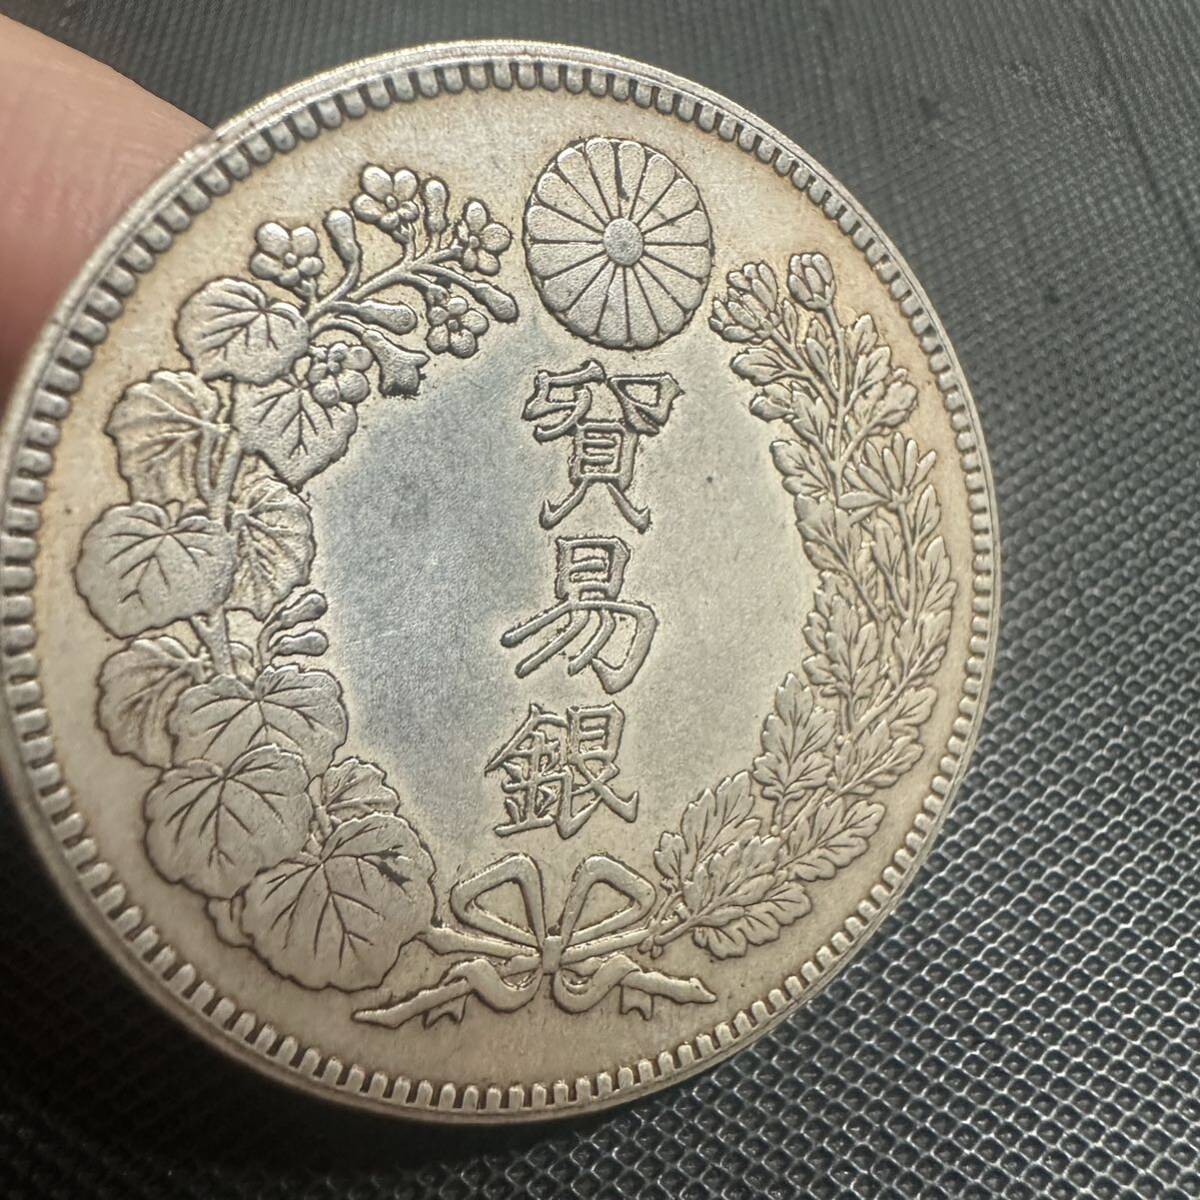  старинная монета  　...  серебро 　 период Мейдзи 8 год 　  большой  Япония   серебряная монета  　 старинная монета  　 дракон  　 дракон  　 монета 　C1  монета  　1  йен  серебряная монета  　 большой размер  монета 